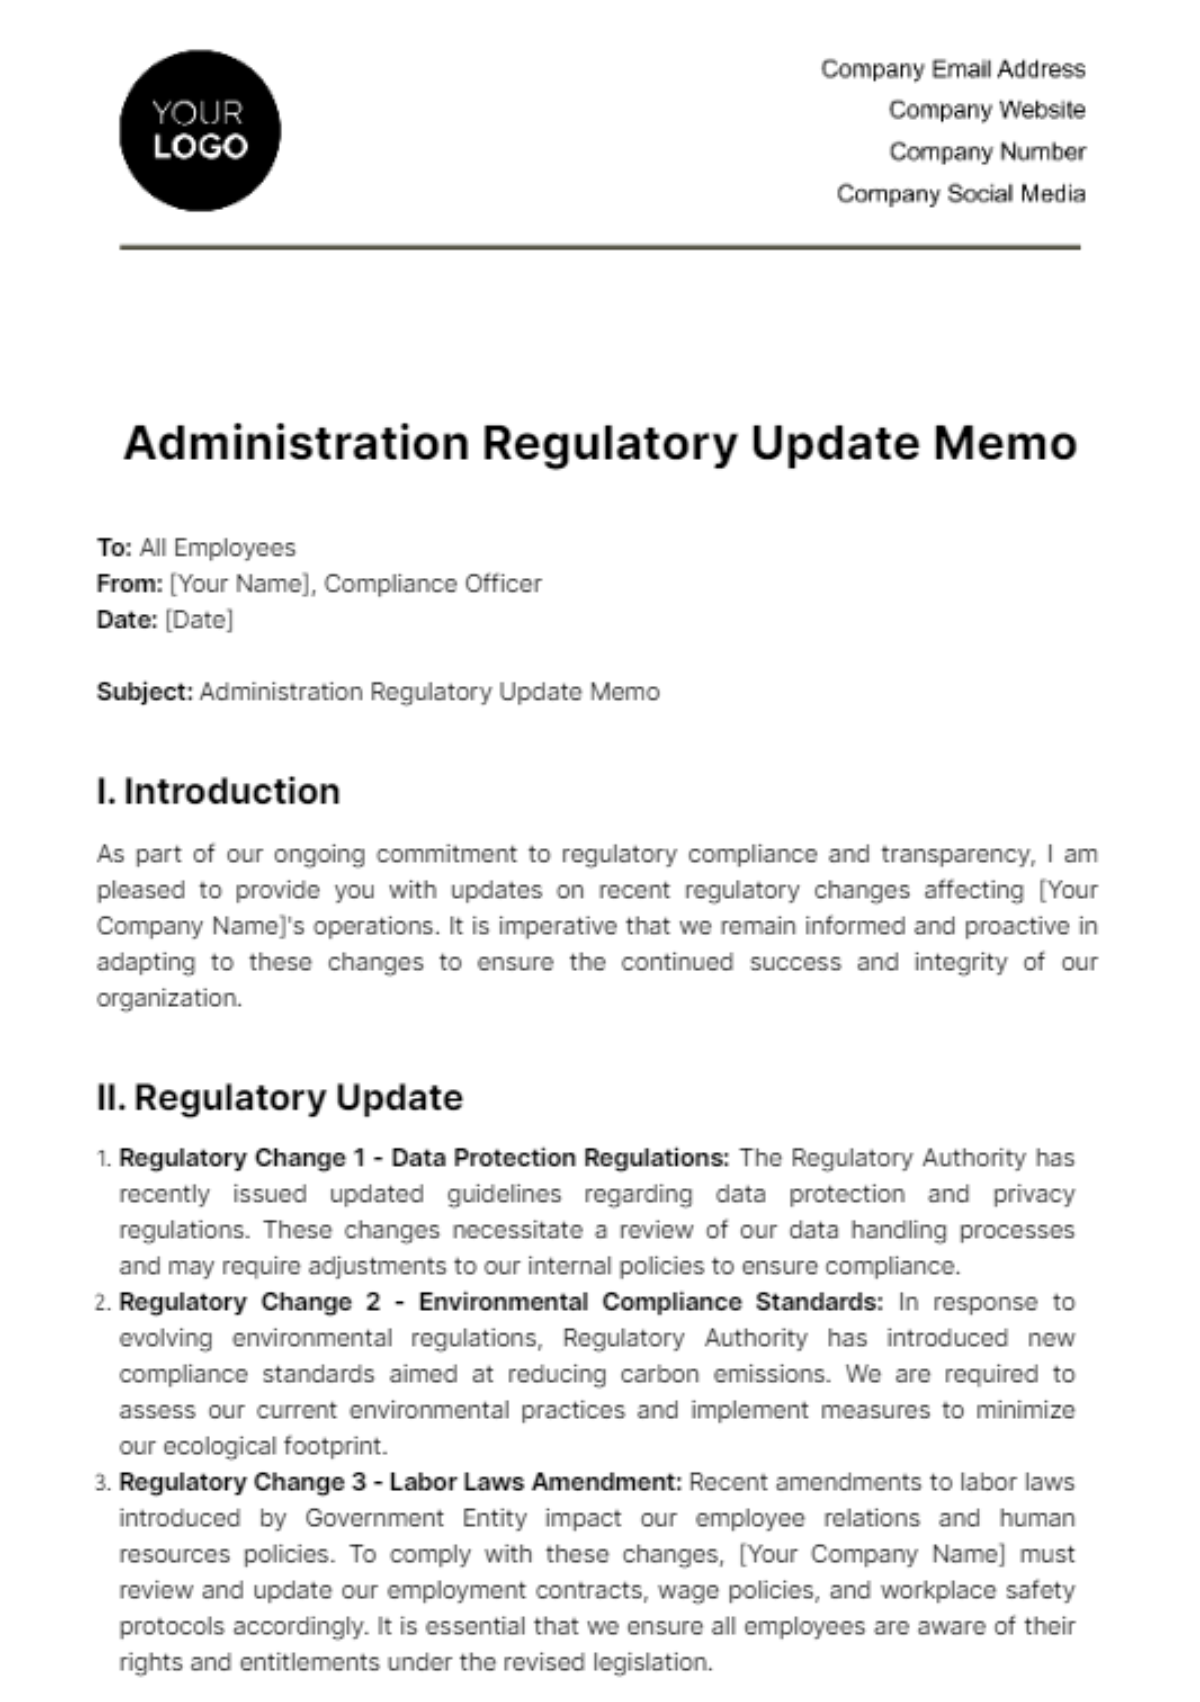 Administration Regulatory Update Memo Template